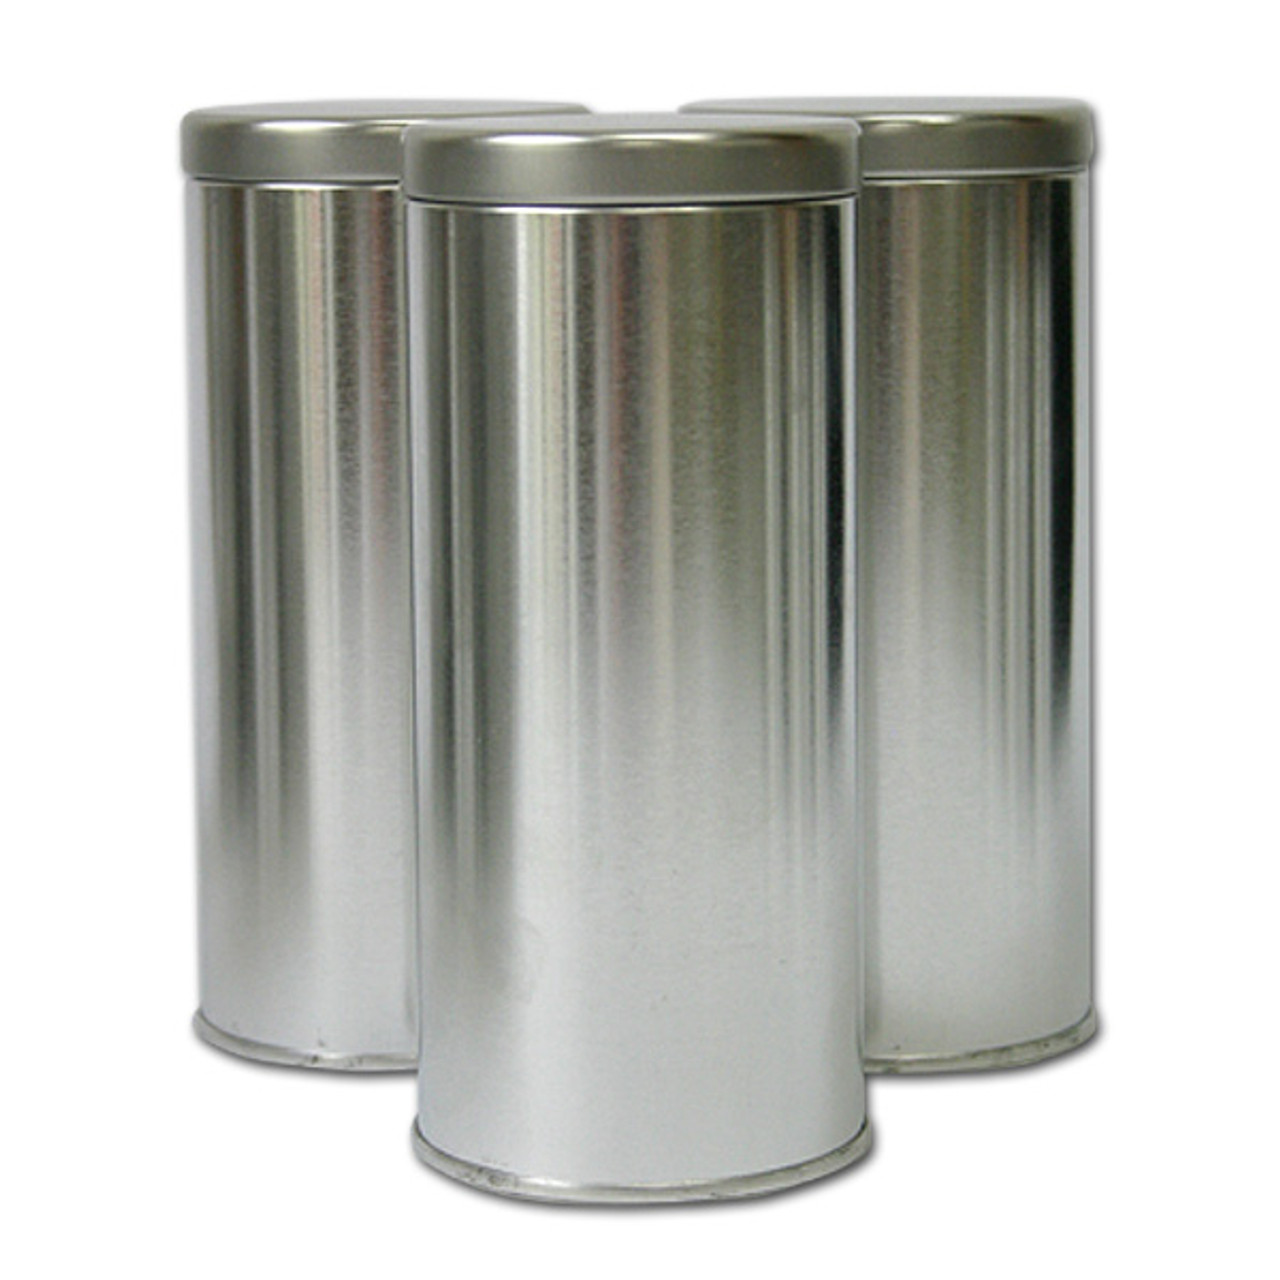 3oz Silver Seamless Tall Tins - Wholesale, 36/Case, Silver